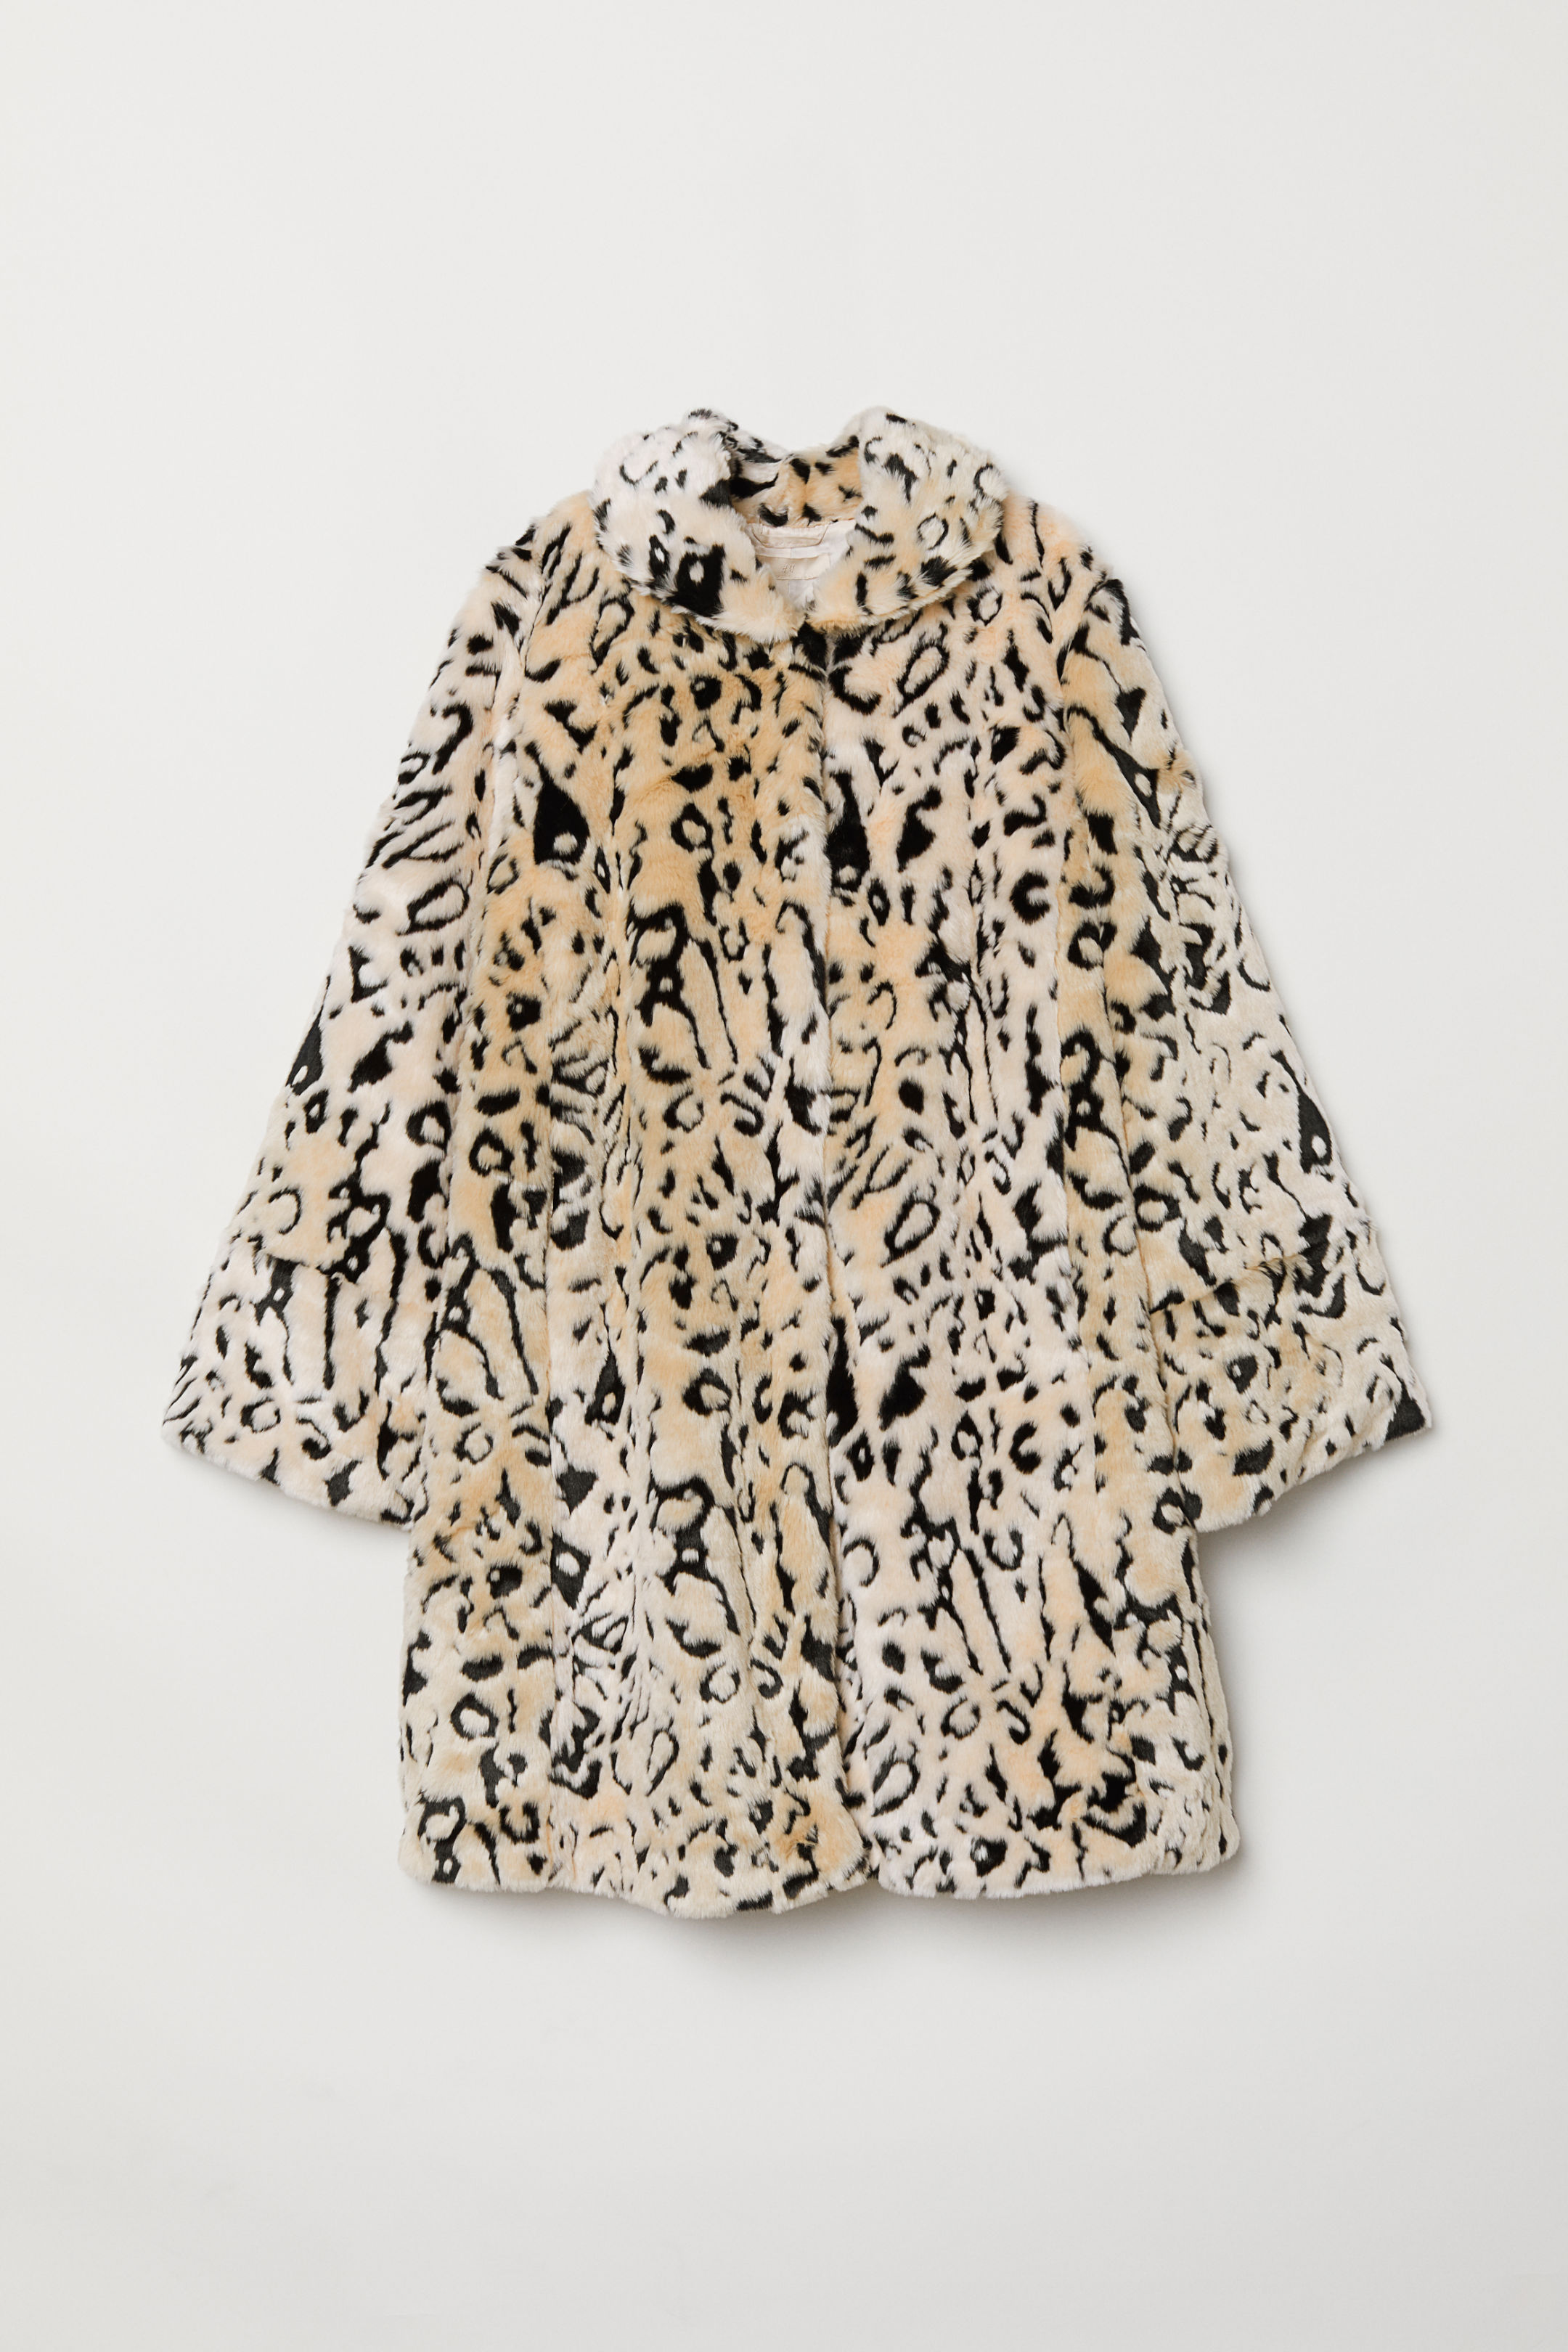 H&M Light Beige Leopard Print Coat